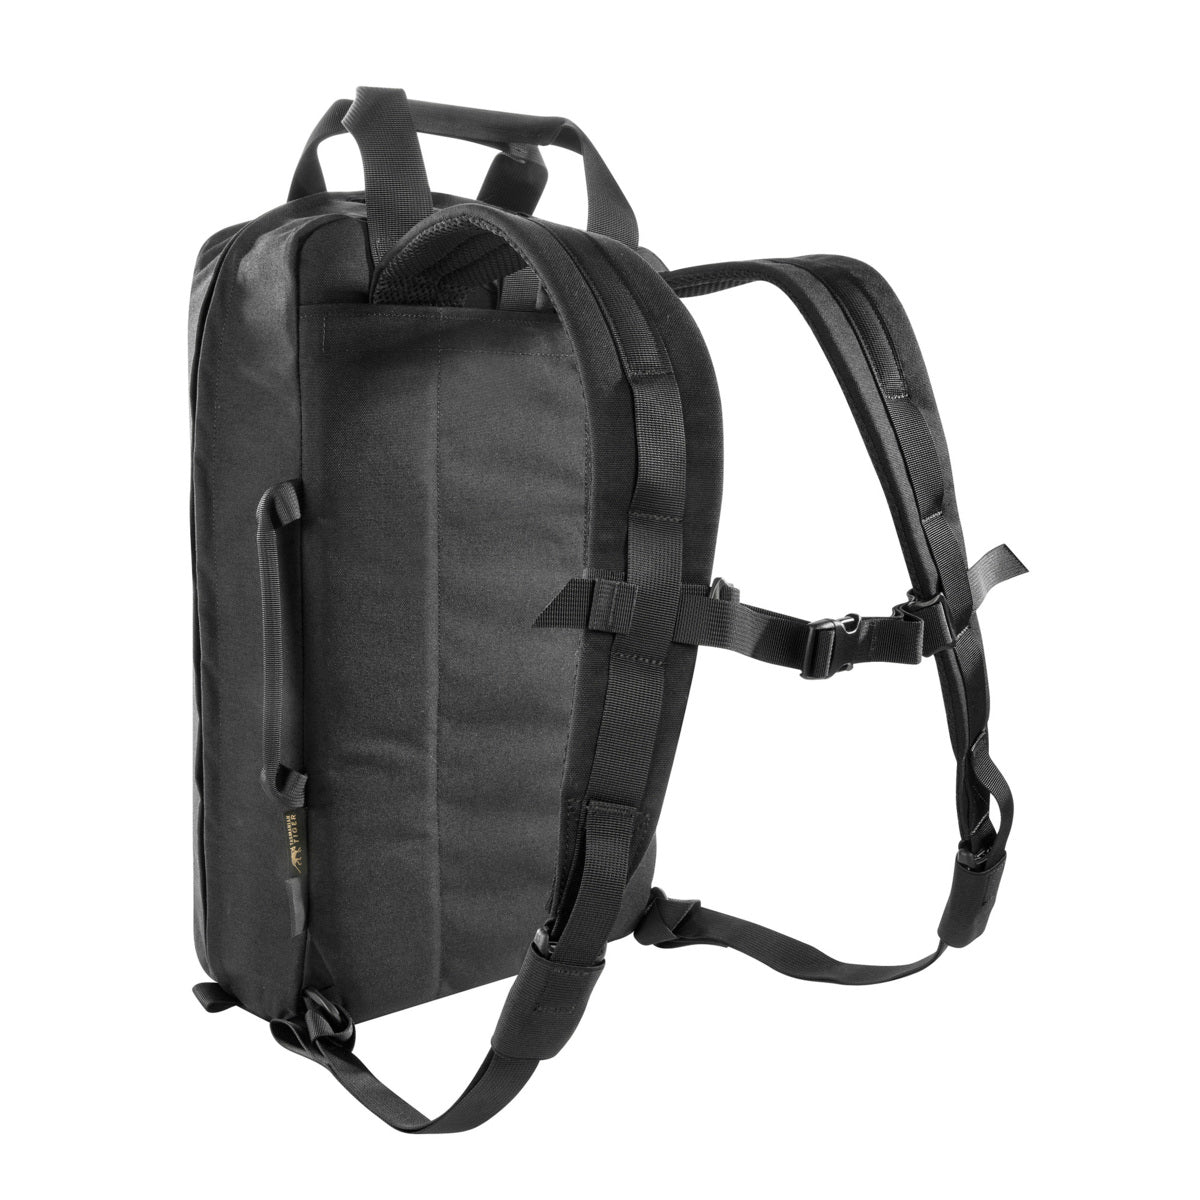 Tasmanian Tiger TT Survival Pack Backpack Bags, Packs and Cases Tasmanian Tiger Black Tactical Gear Supplier Tactical Distributors Australia